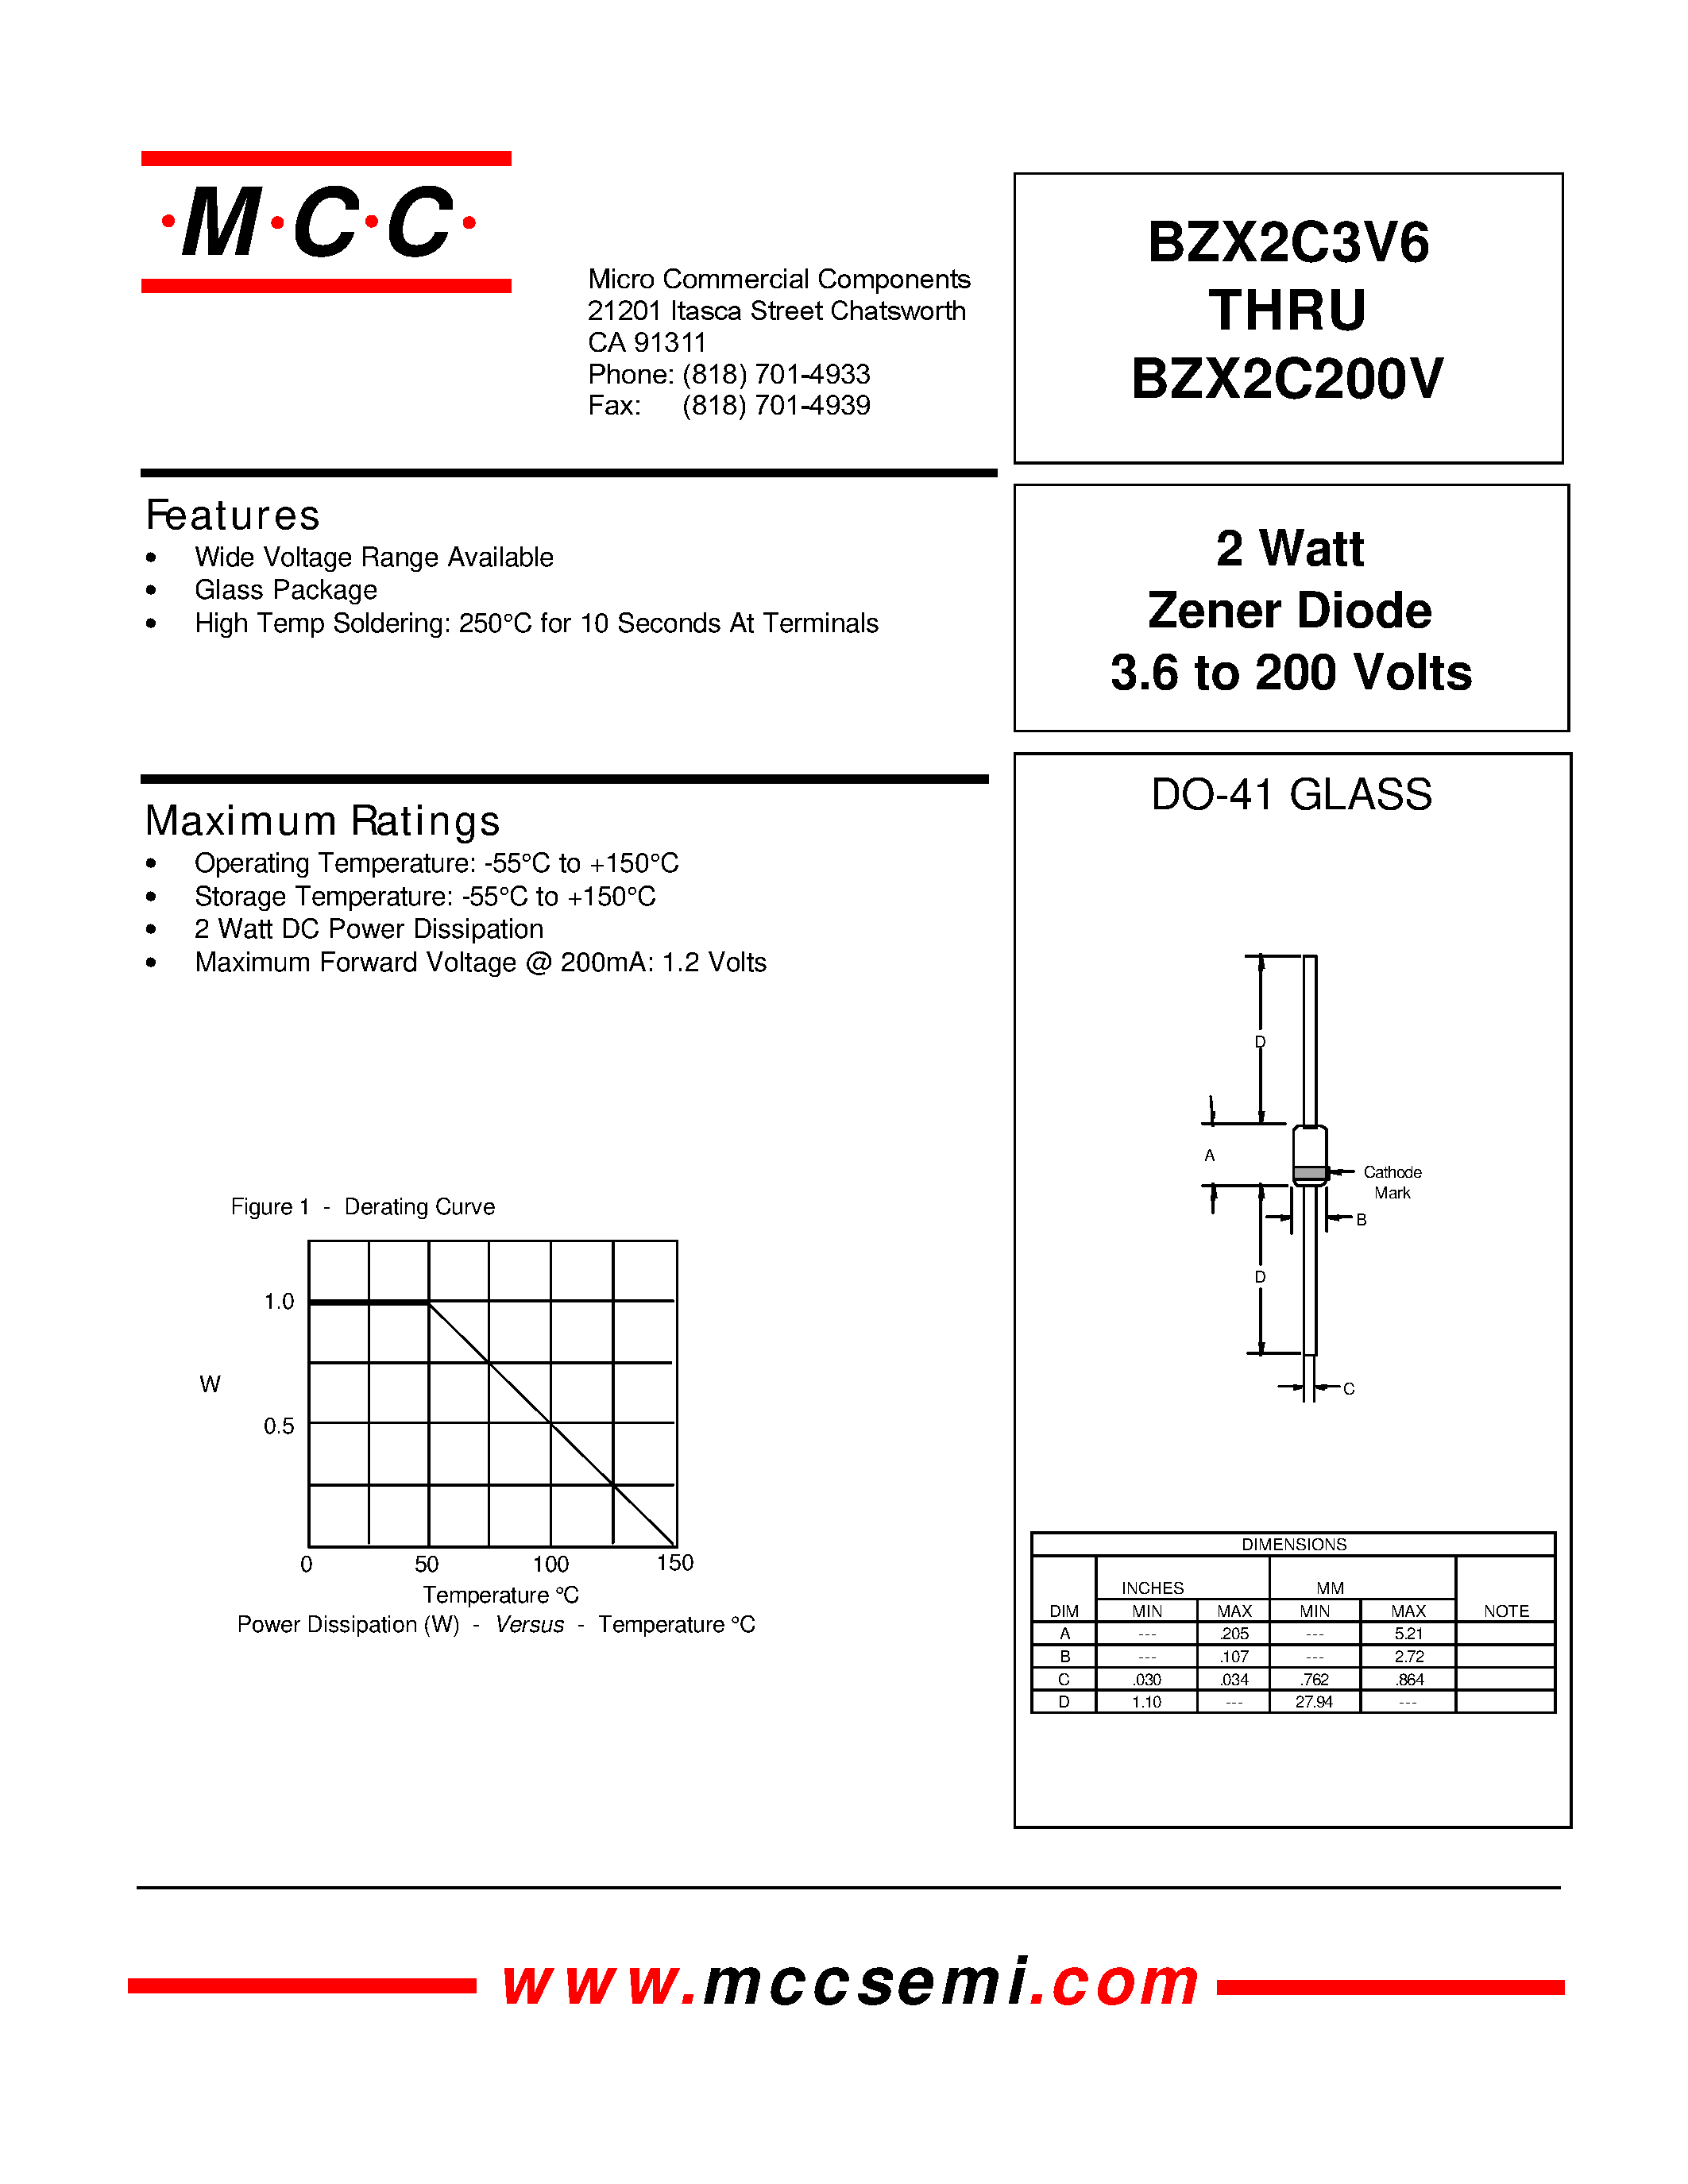 Даташит BZX2C47V - 2 Watt Zener Diode 3.6 to 200 Volts страница 1